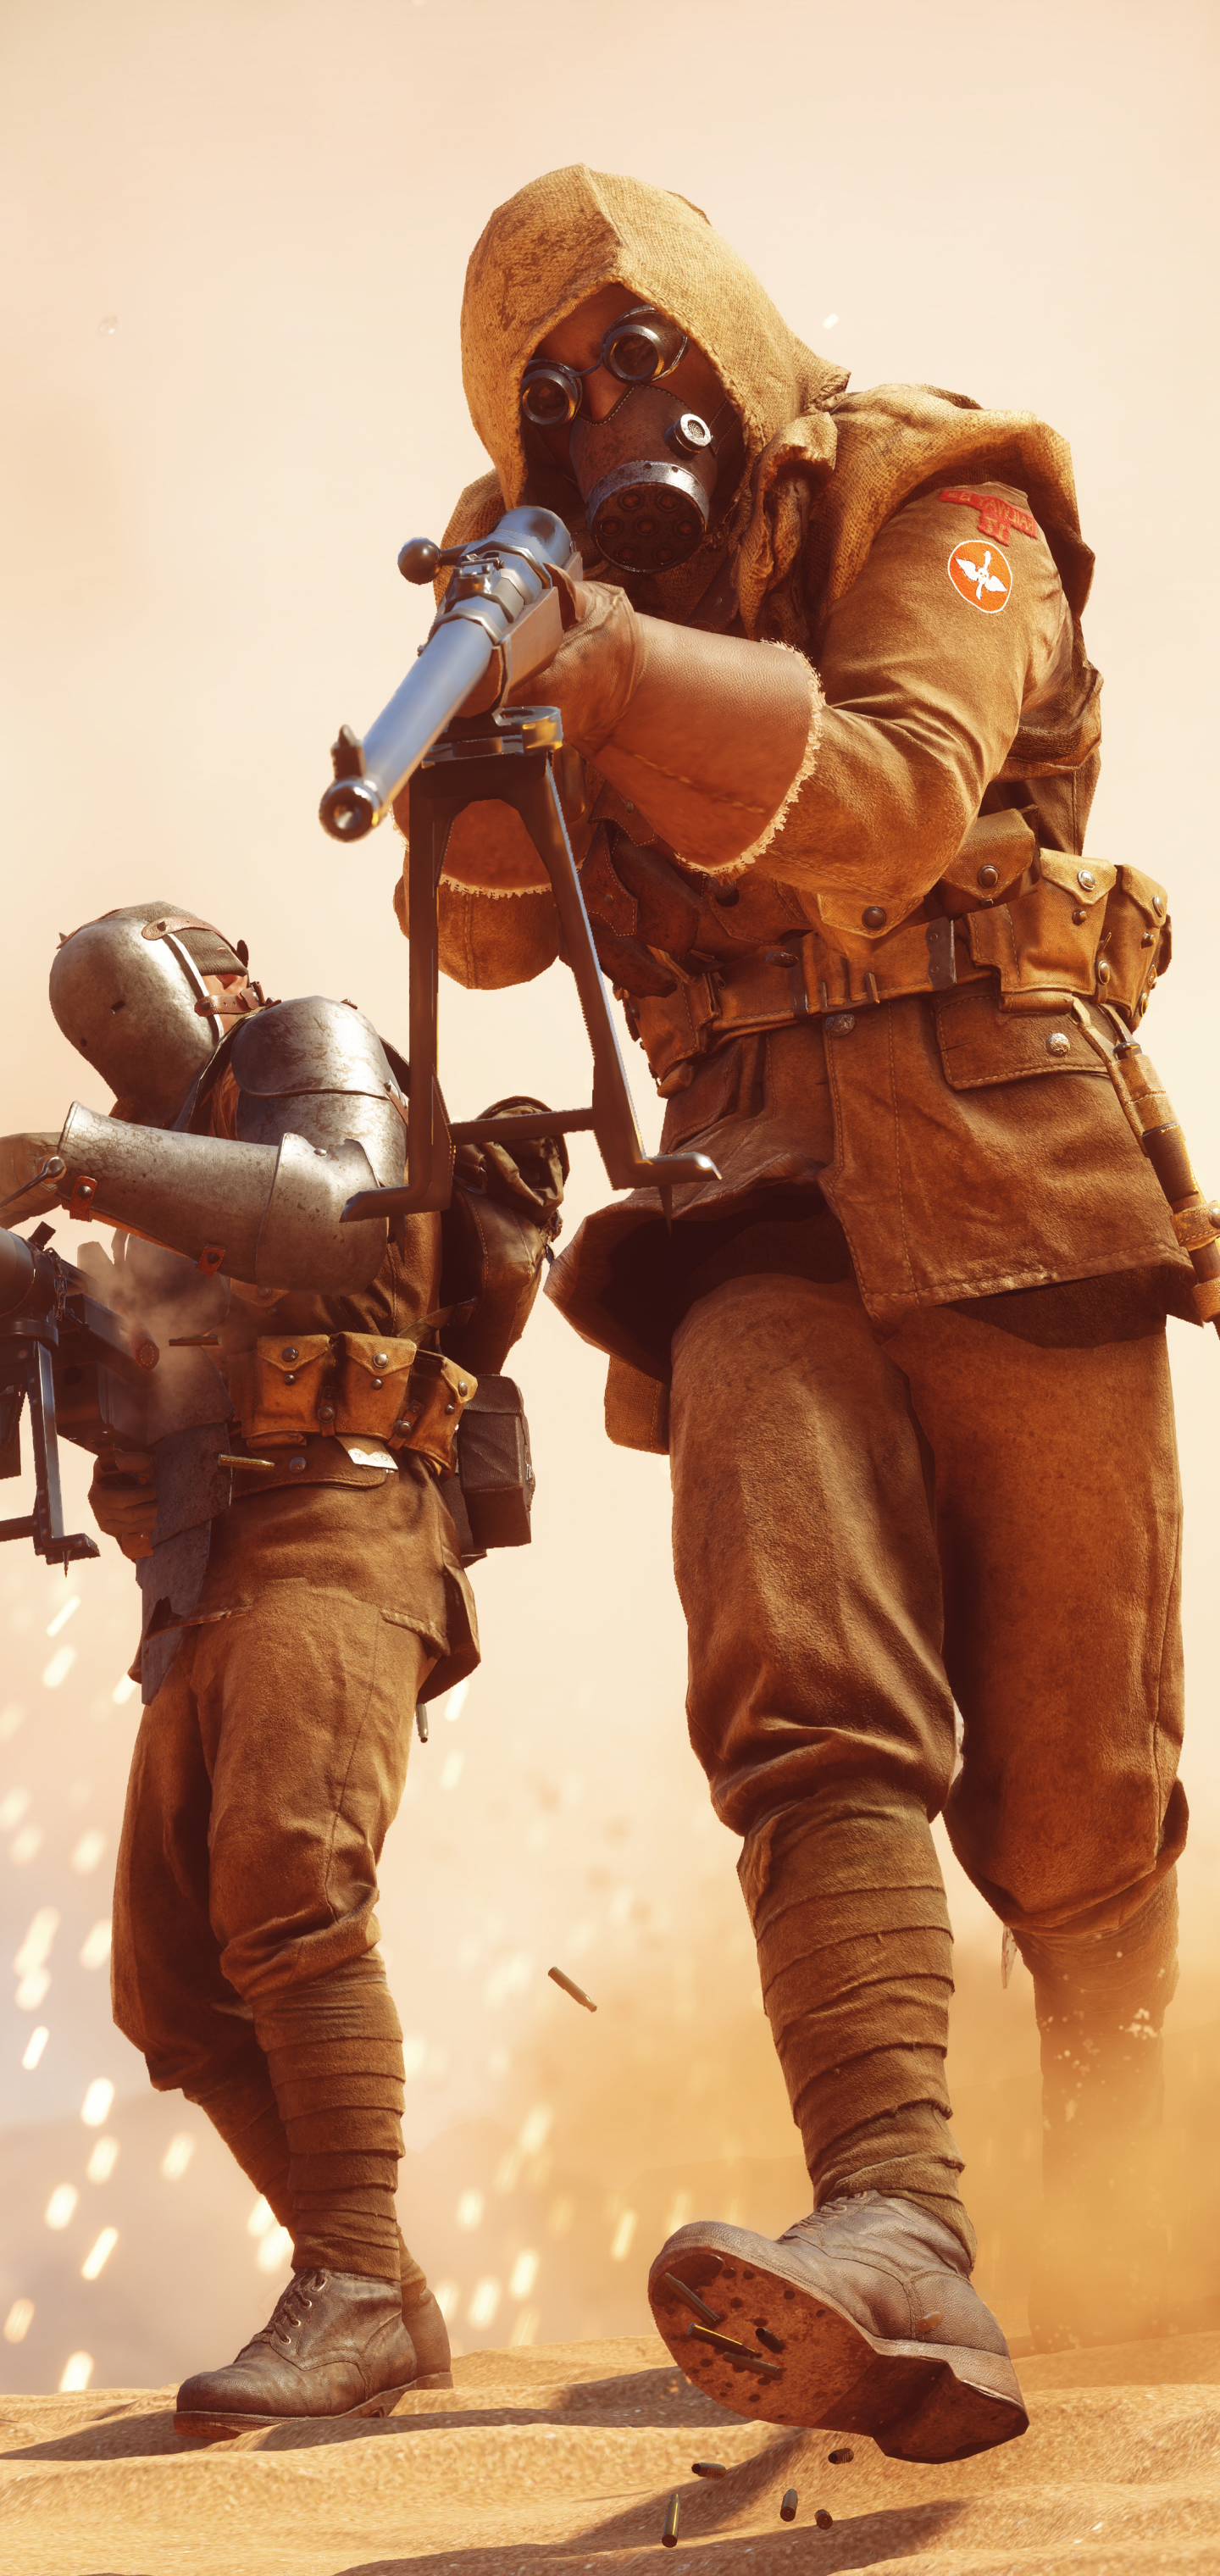 Battlefield 1 Phone Wallpaper by Berduu